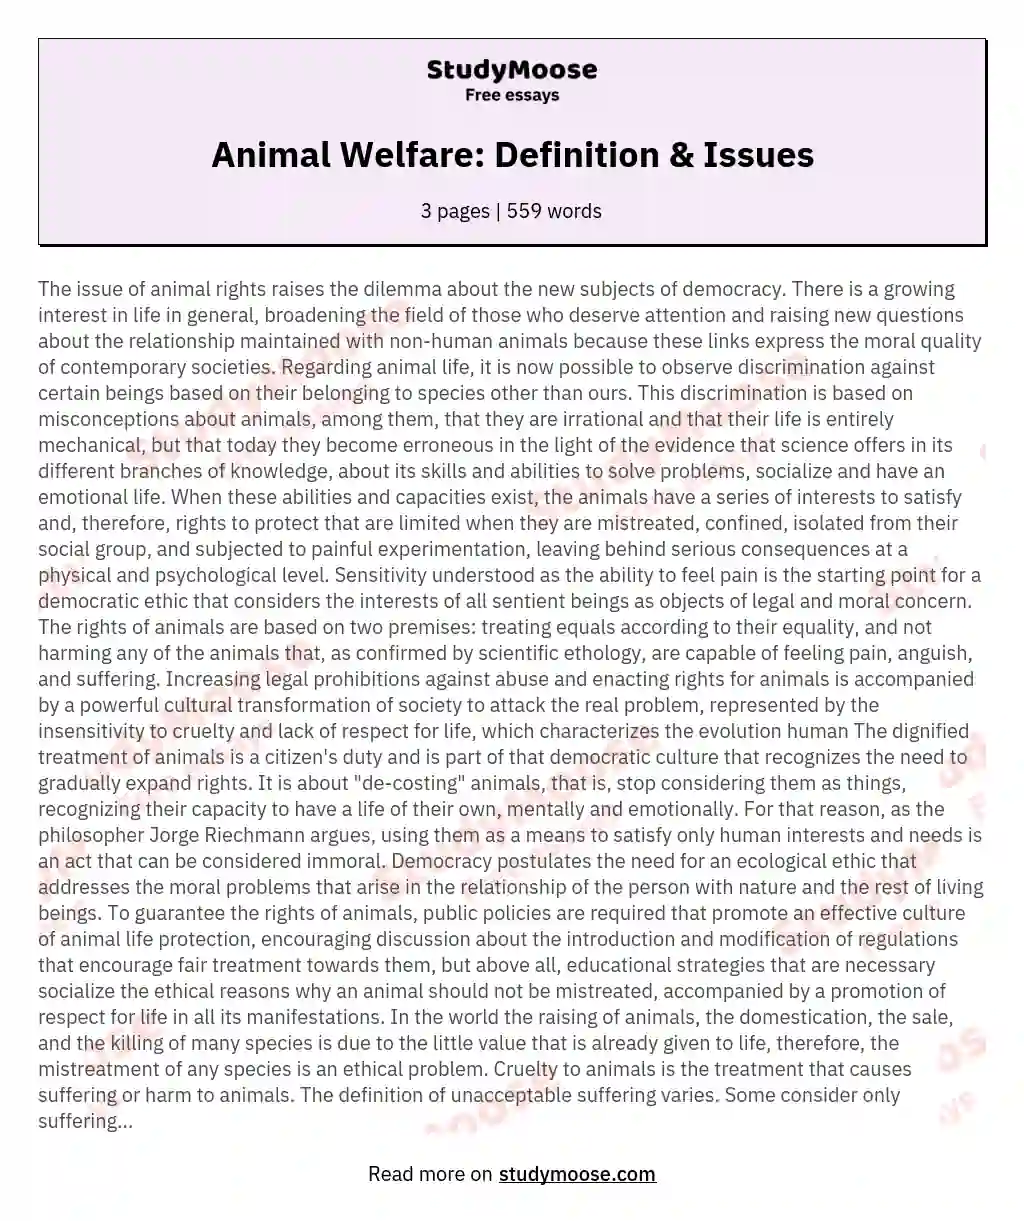 Animal Welfare: Definition & Issues essay